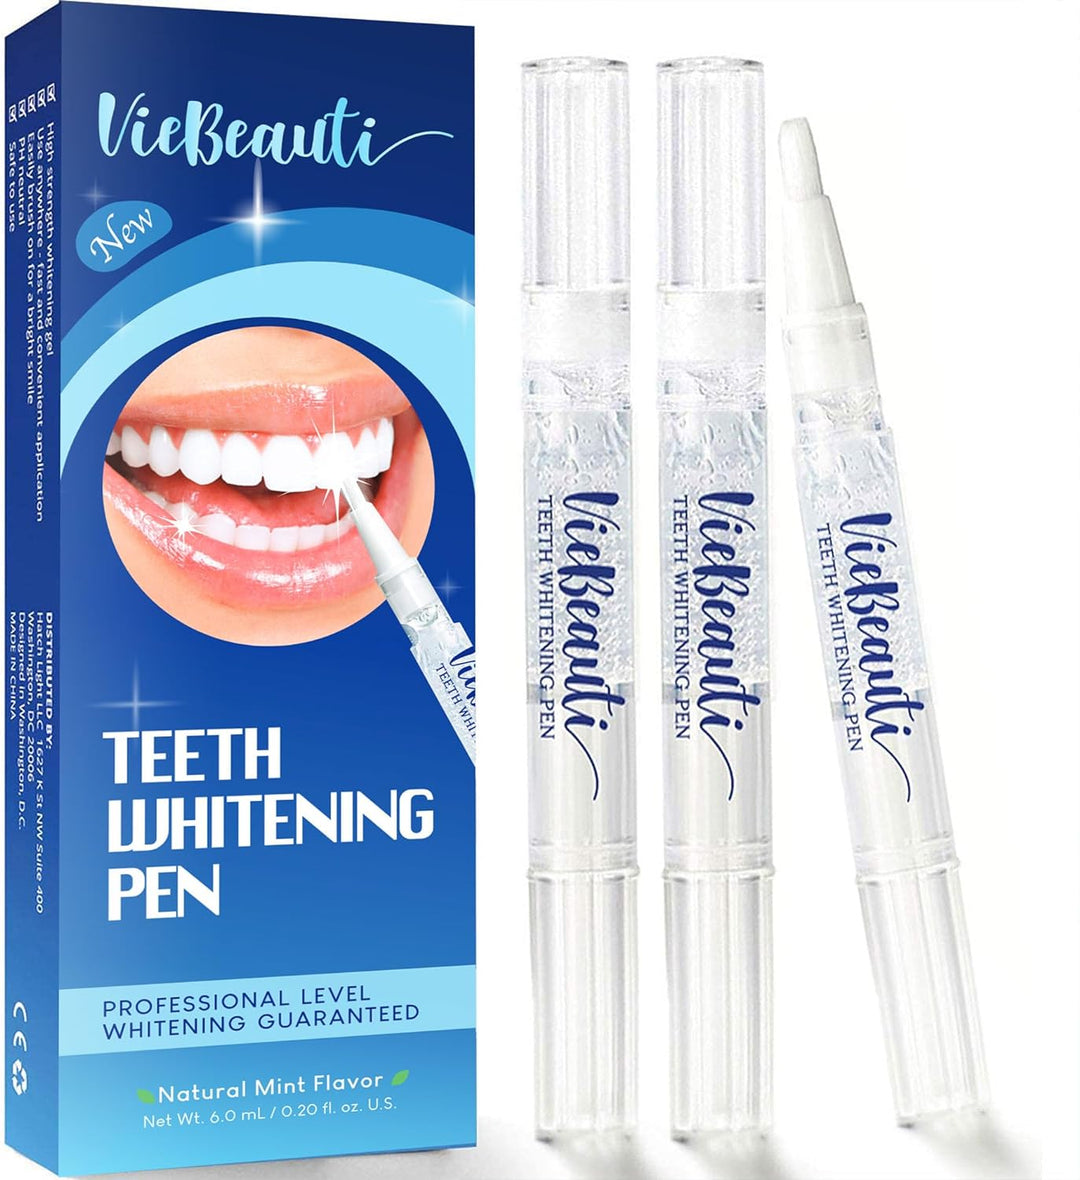 VieBeauti Teeth Whitening Pen, 30+ Uses, Effective, Painless, No Sensitivity, Travel-Friendly, Easy (3 Pcs)